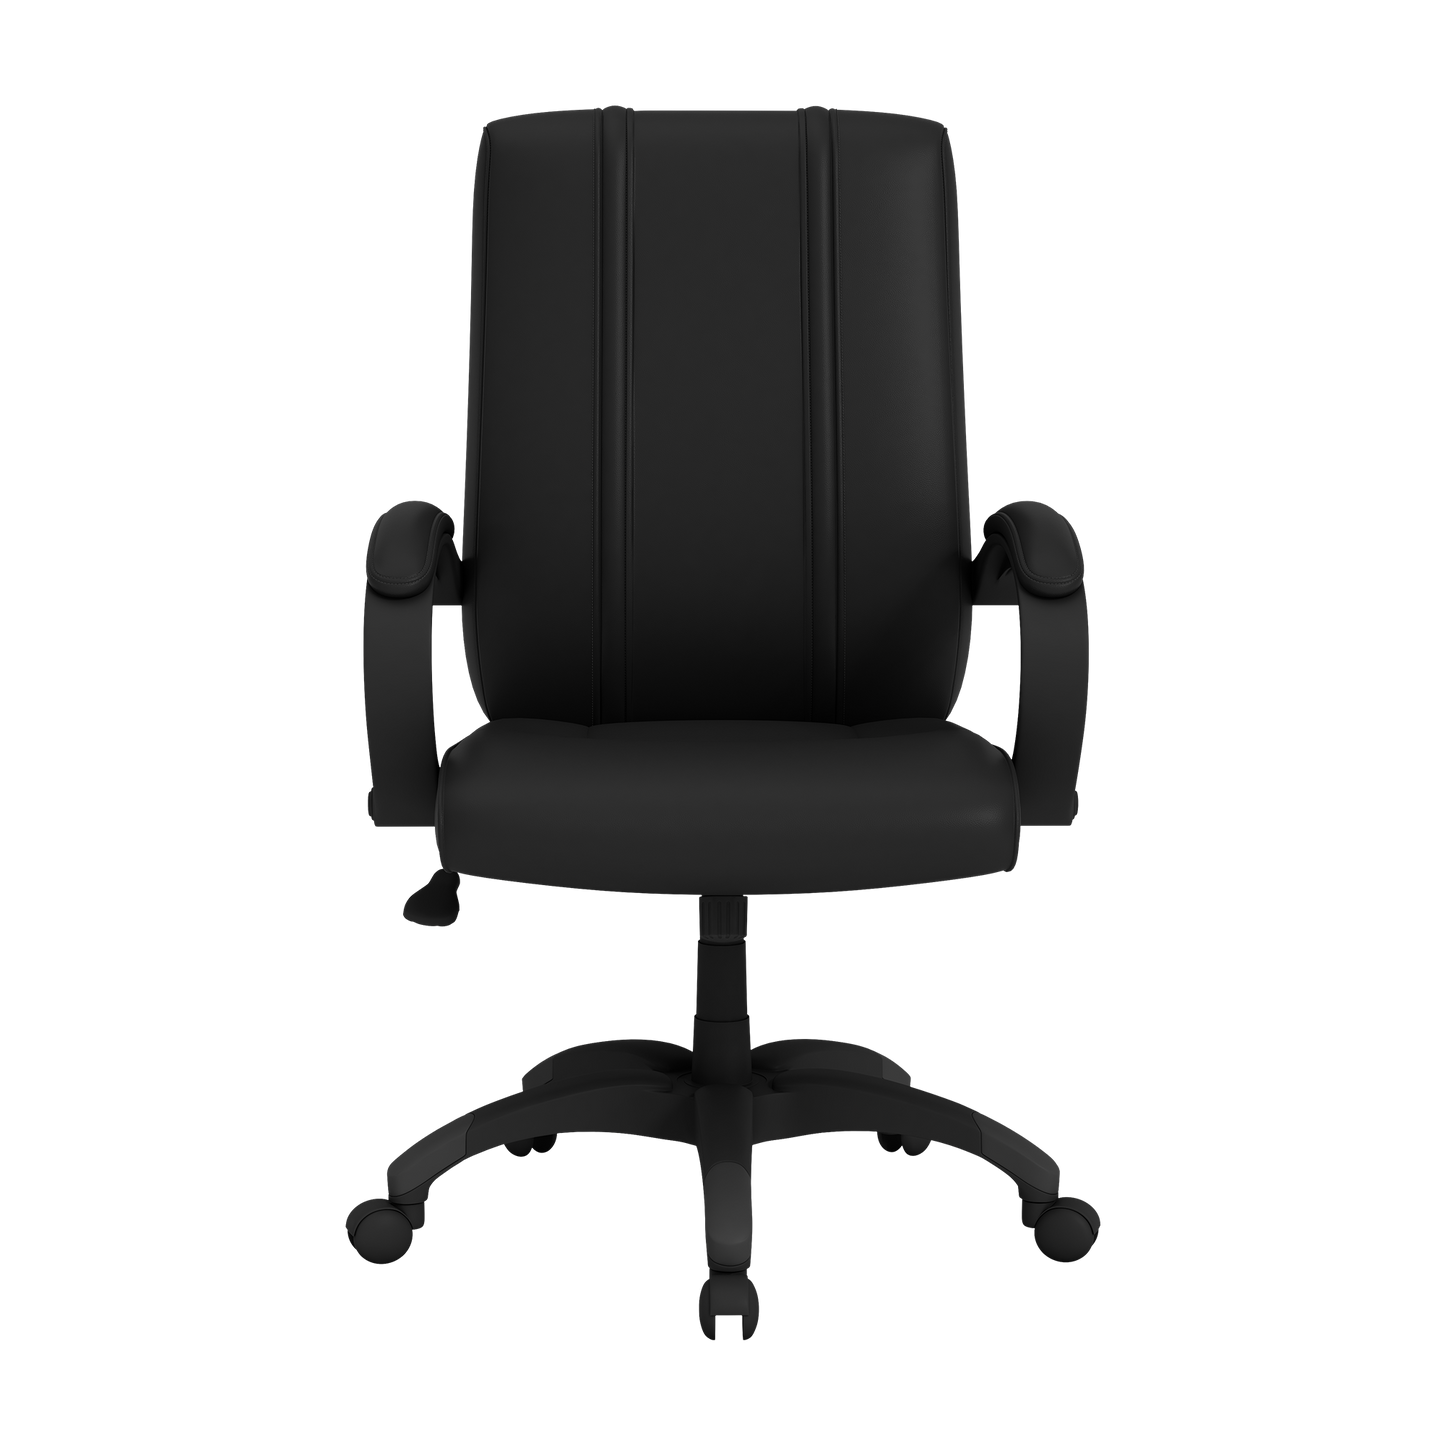 Office Chair 1000 with Iowa Hawkeyes Logo